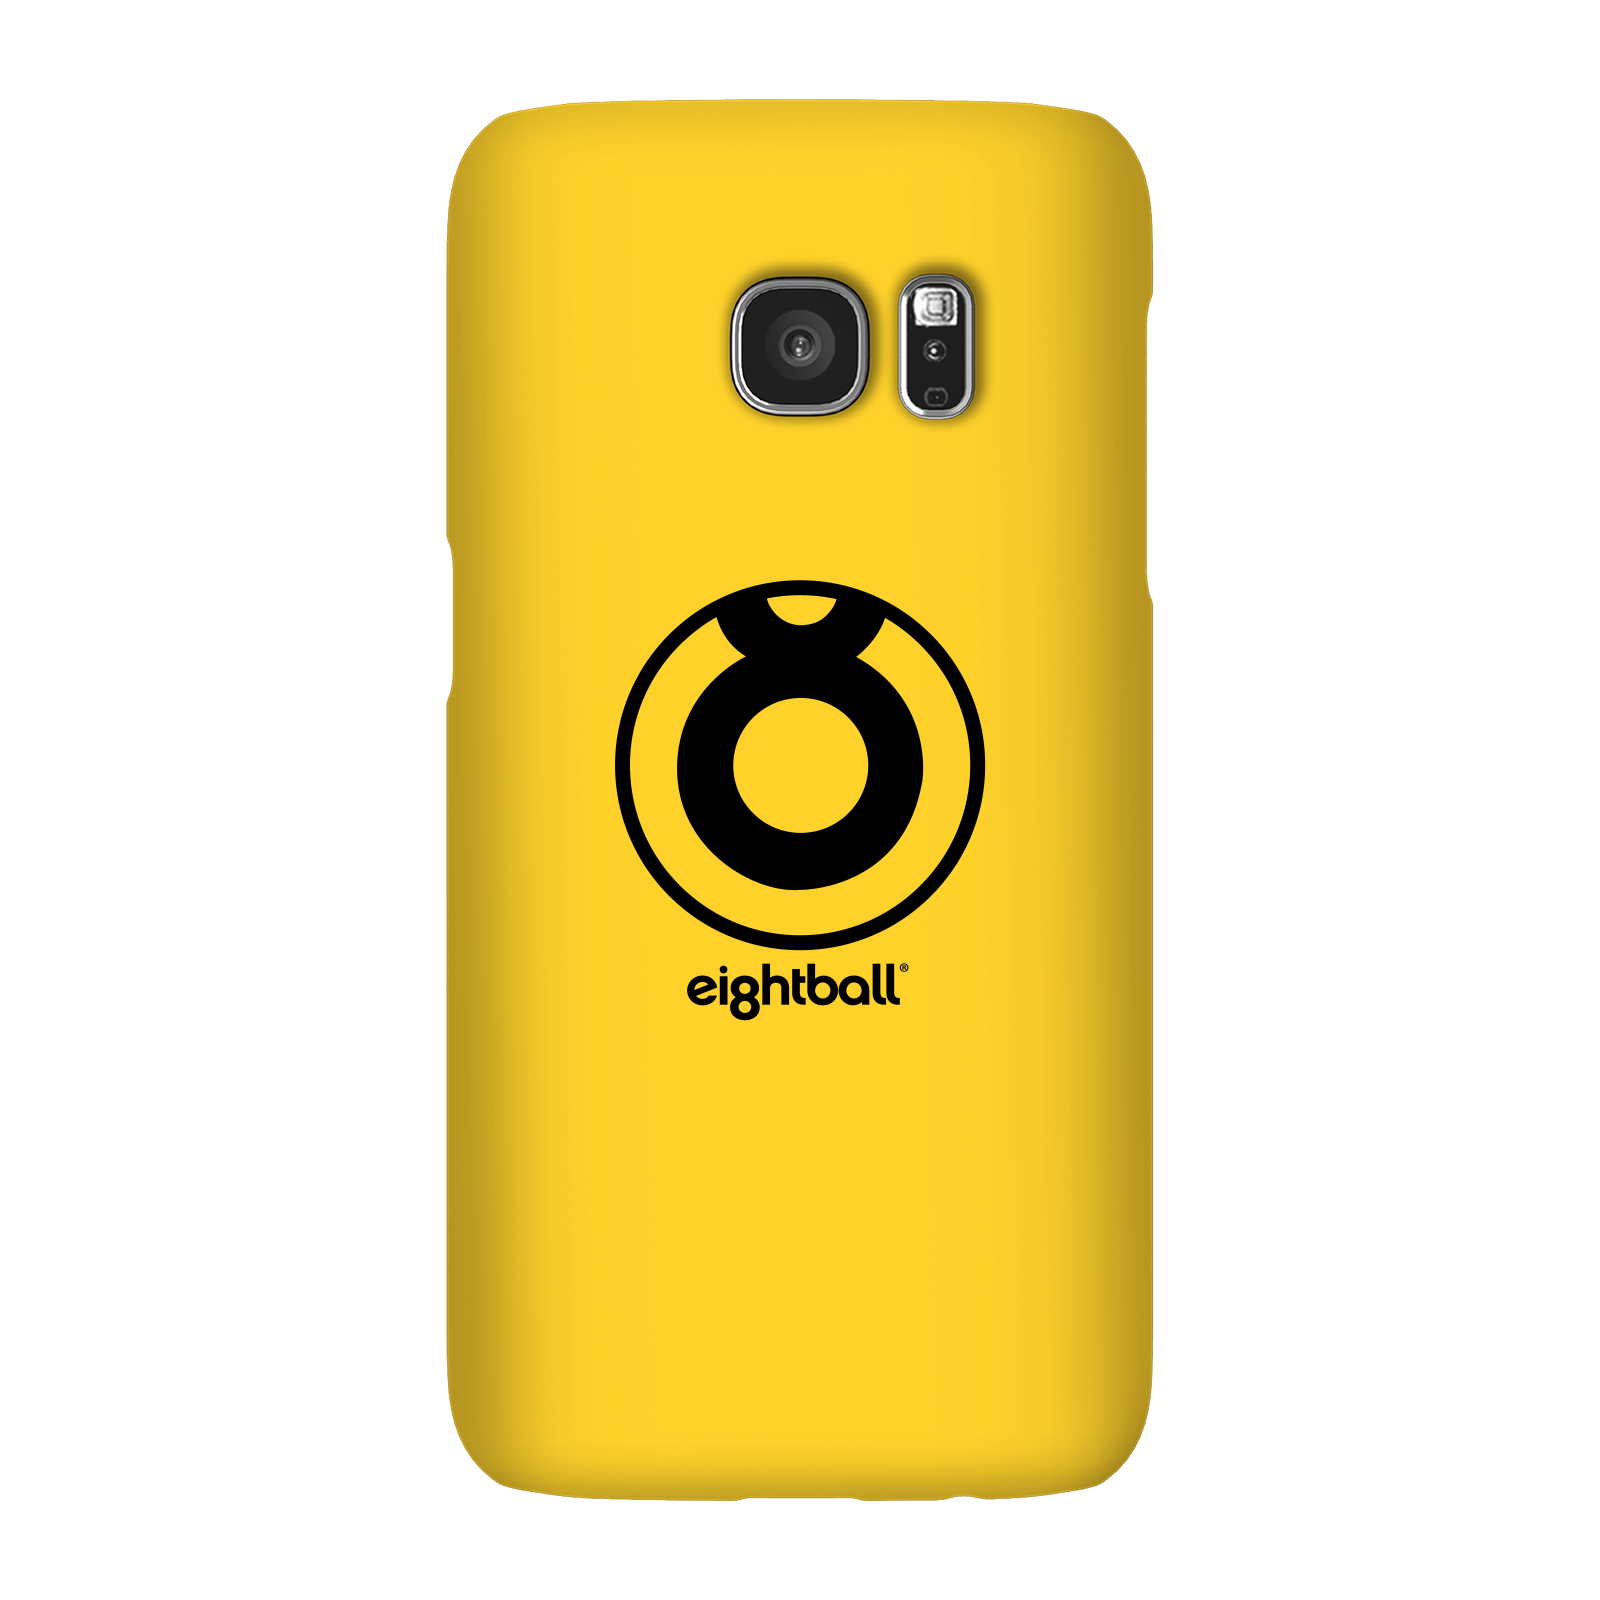 Funda Móvil Ei8htball Large Circle Logo para iPhone y Android - Samsung S7 - Carcasa rígida - Brillante